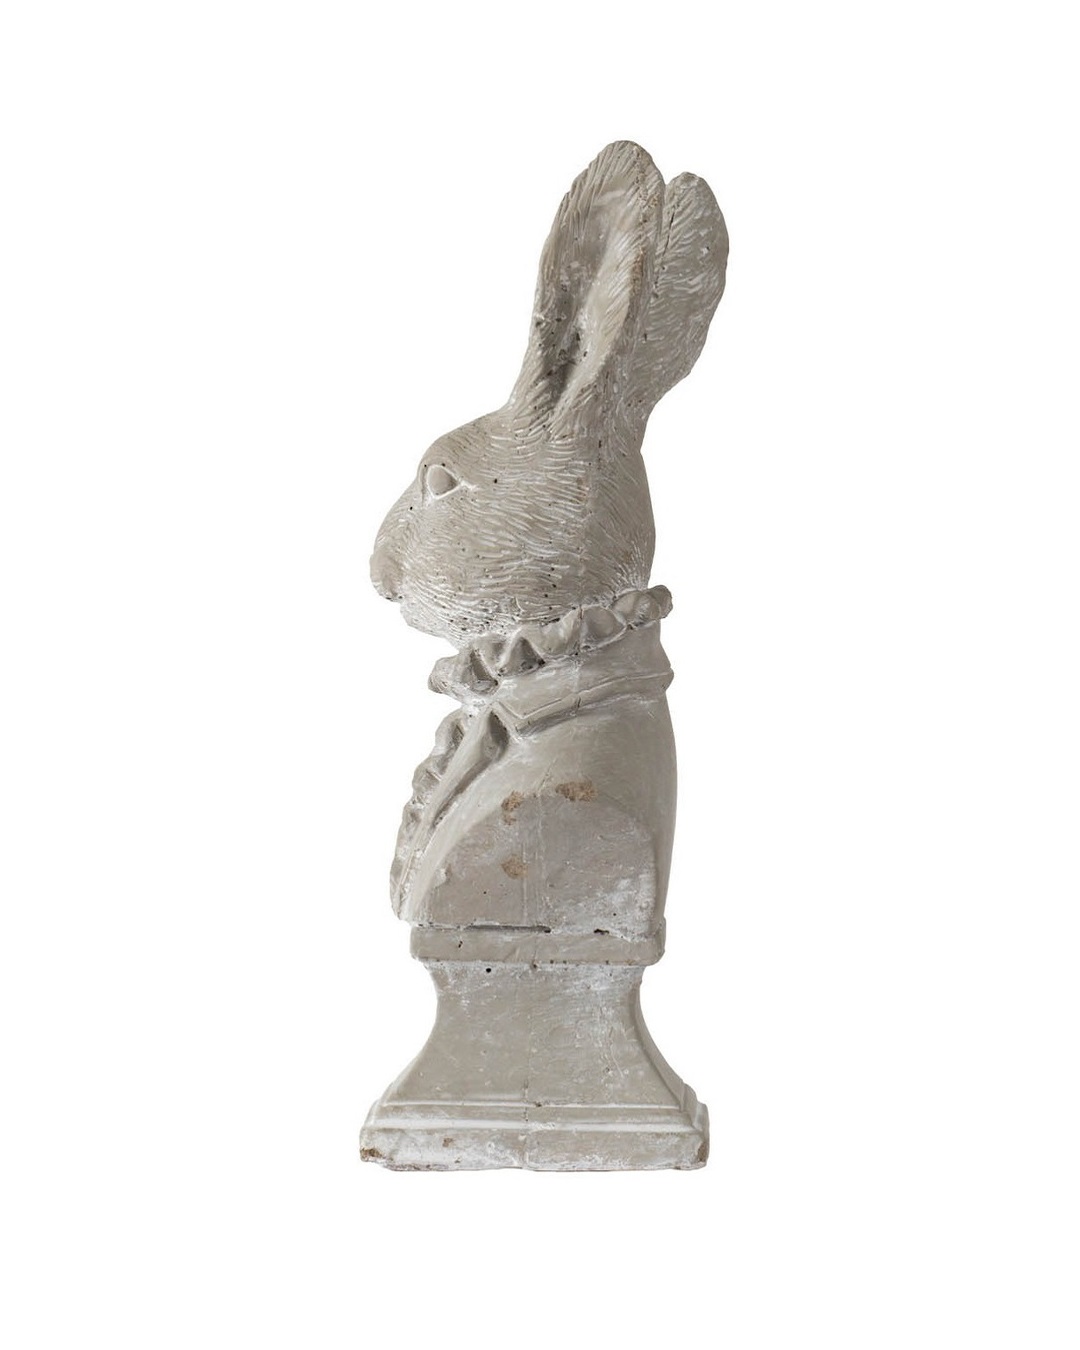 Mr Rabbit in a suit statue